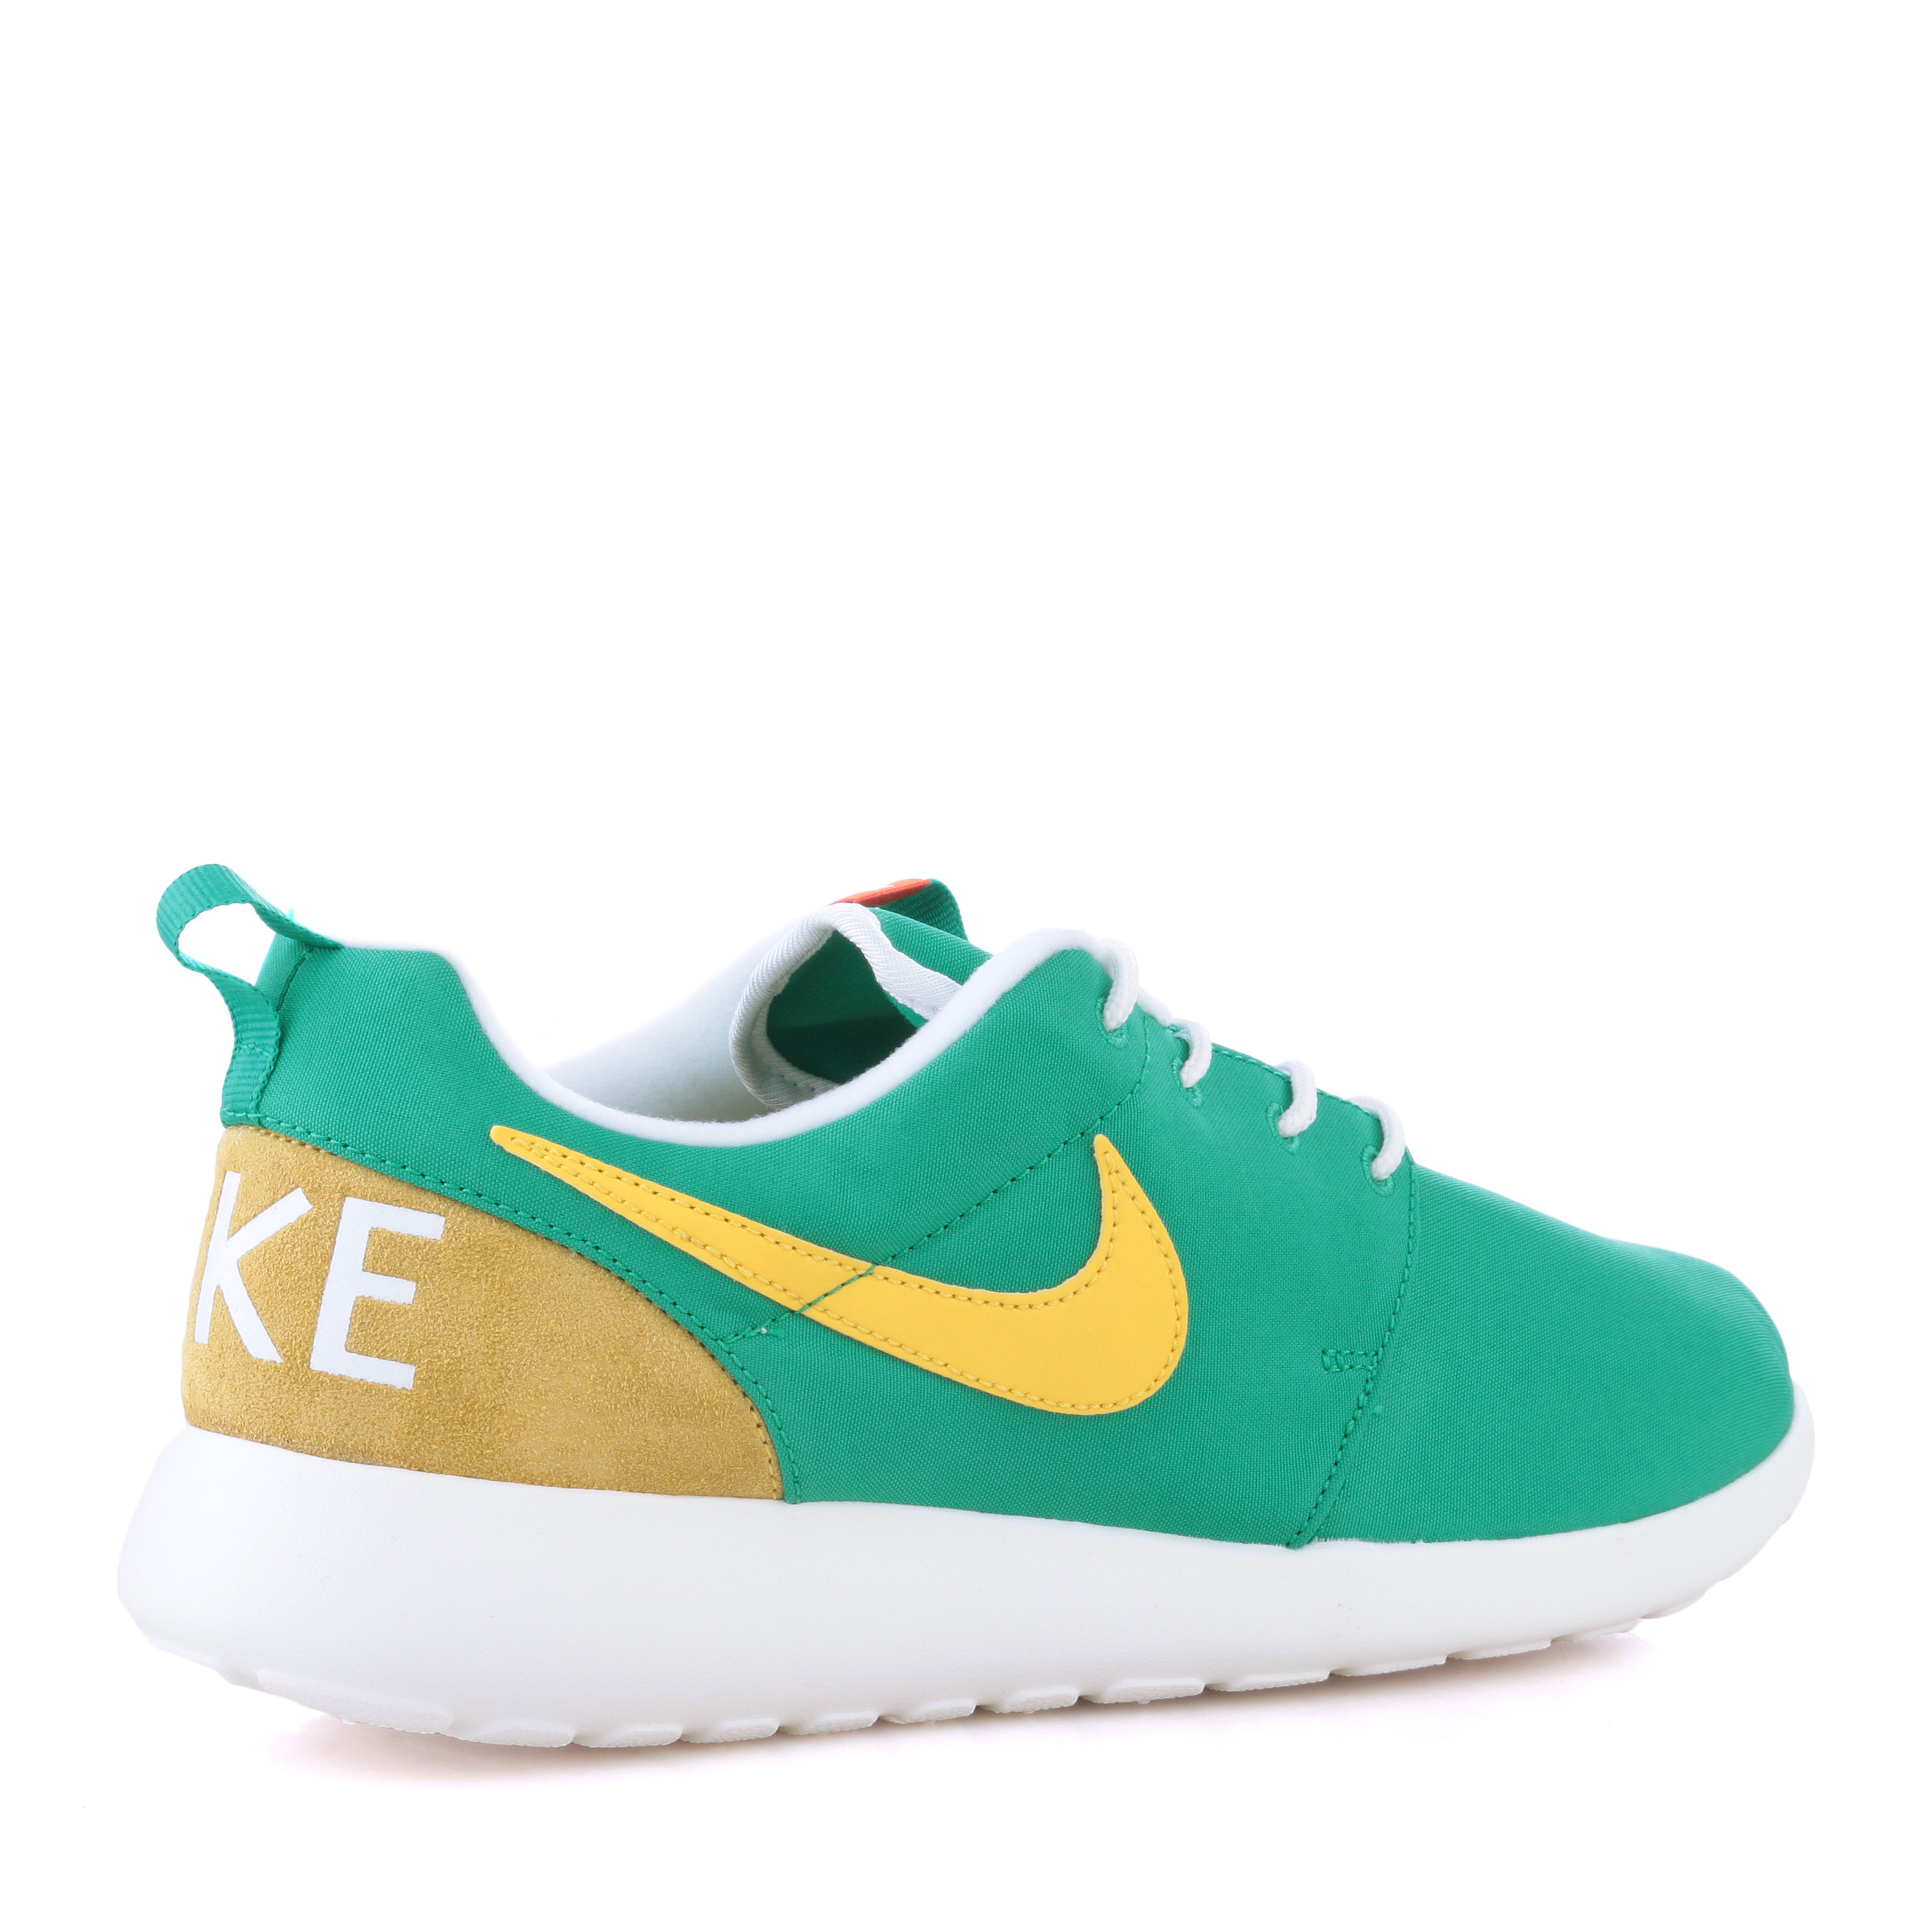 мужские зеленые кроссовки Nike Roshe One Retro 819881-371 - цена, описание, фото 2